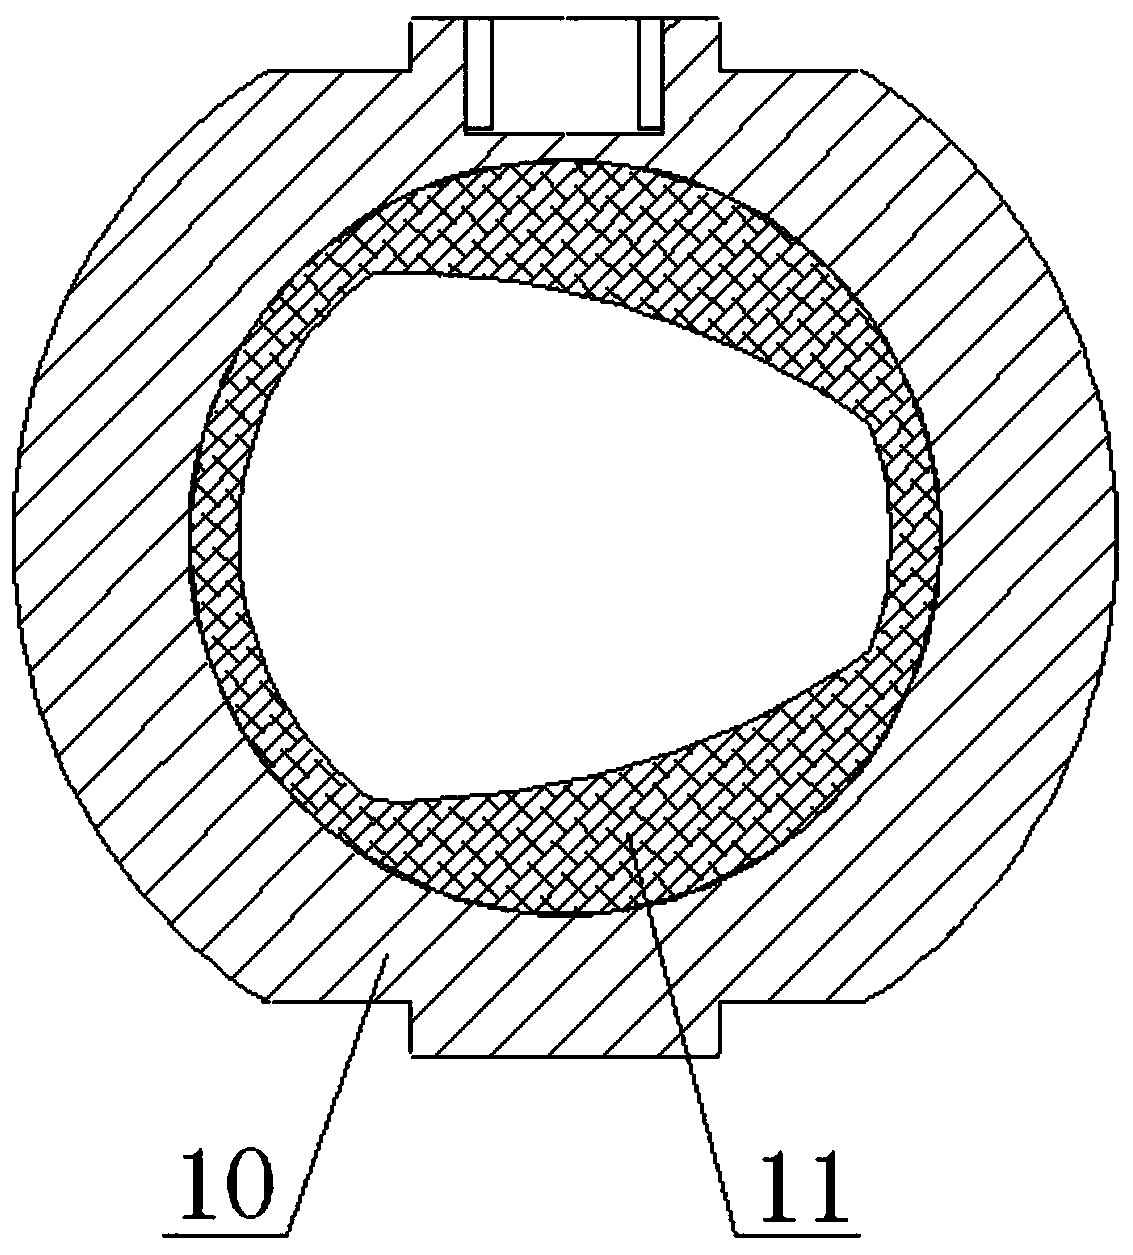 Double-valve-seat regulating ball valve